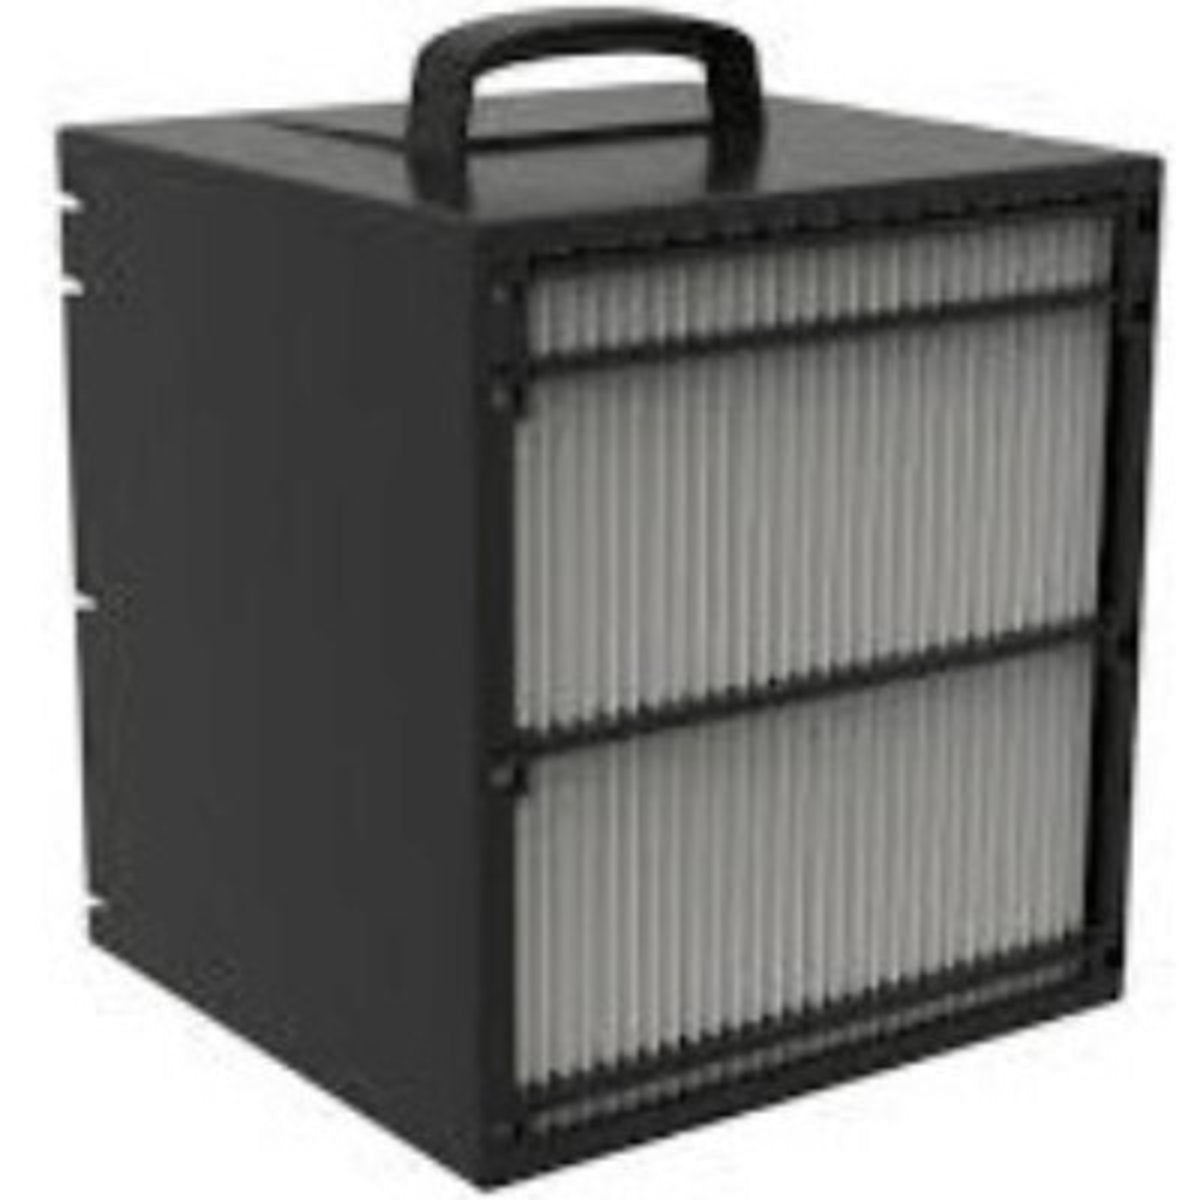 Evapolar - evaCHILL EV-500 small mobile air conditioner third generation special filter box